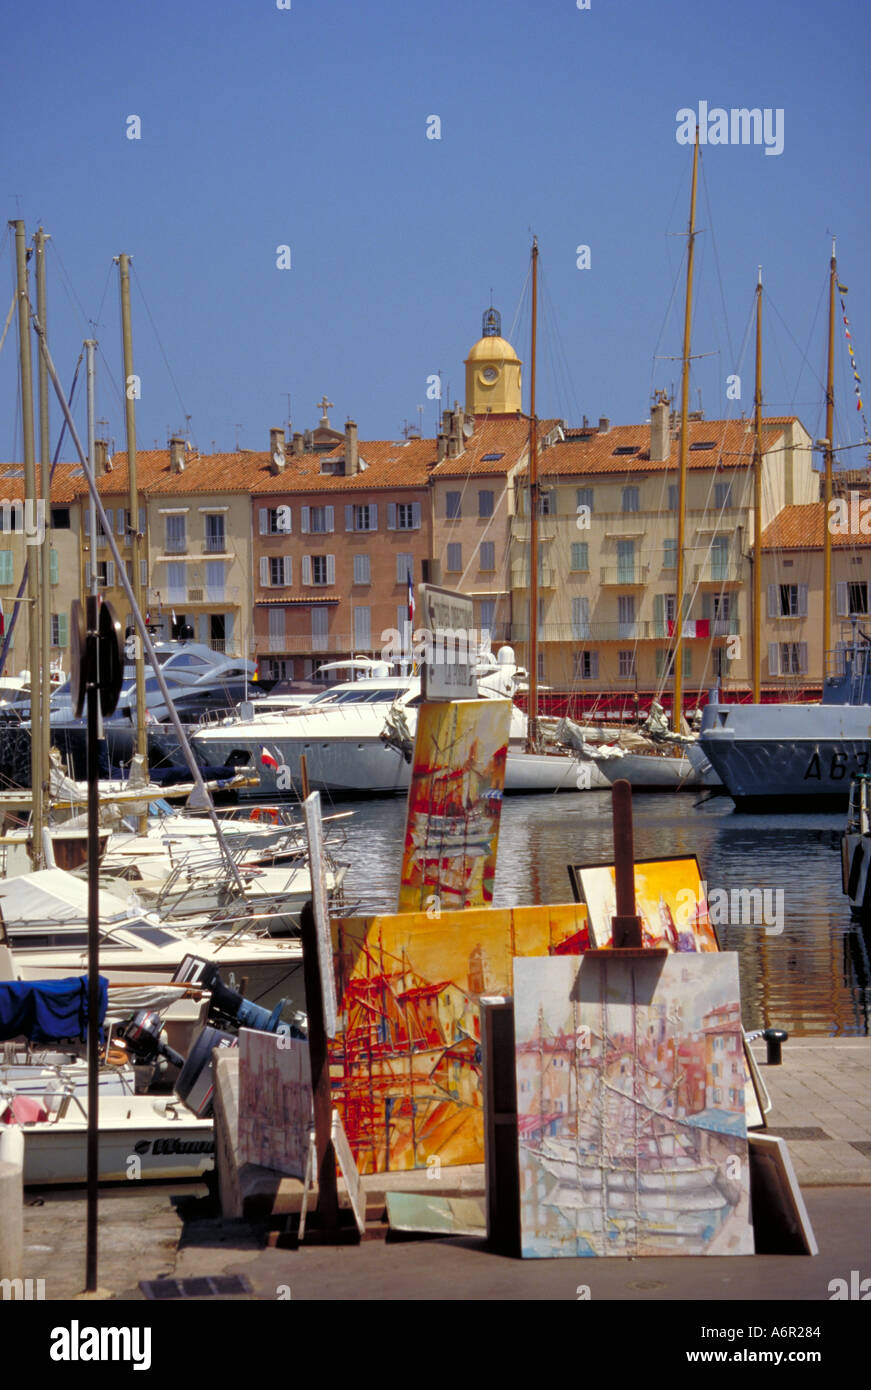 Art Paintings St Tropez France Stock Photo